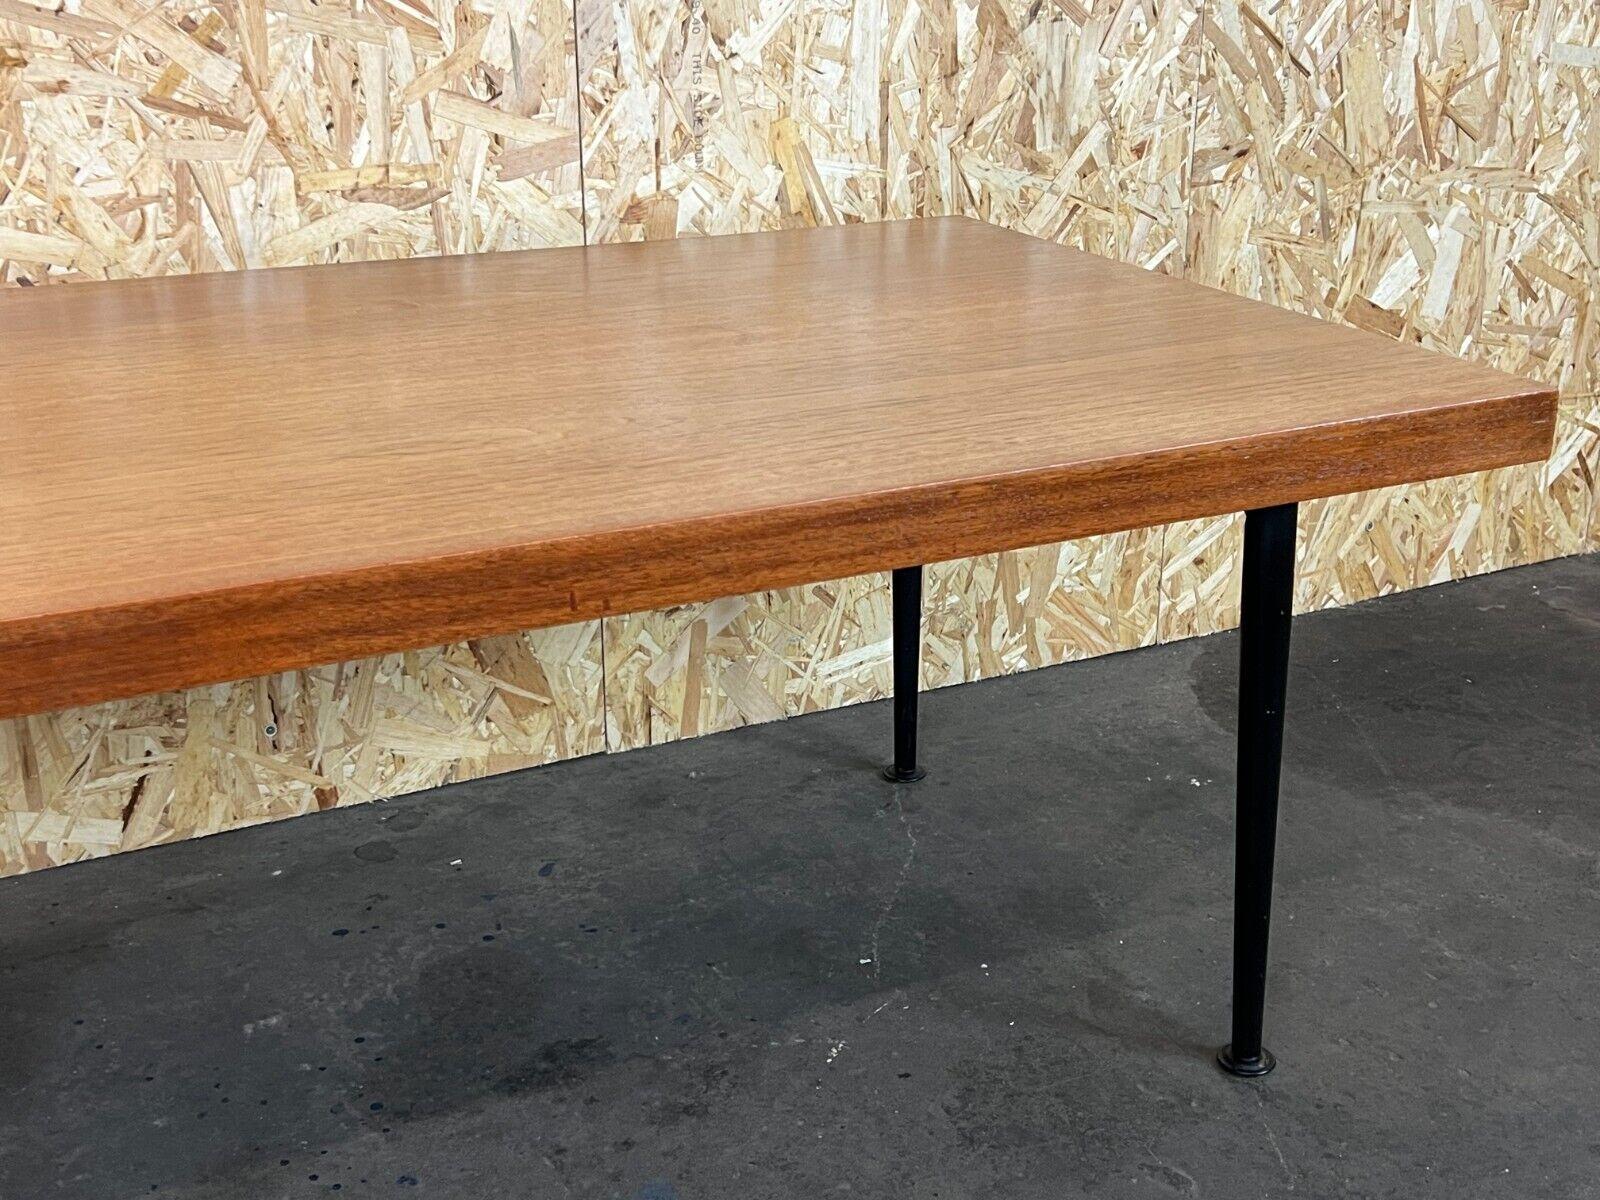 1960s-1970s Teak Coffee Table Side Table Ilse Möbel Danish Modern Design For Sale 1